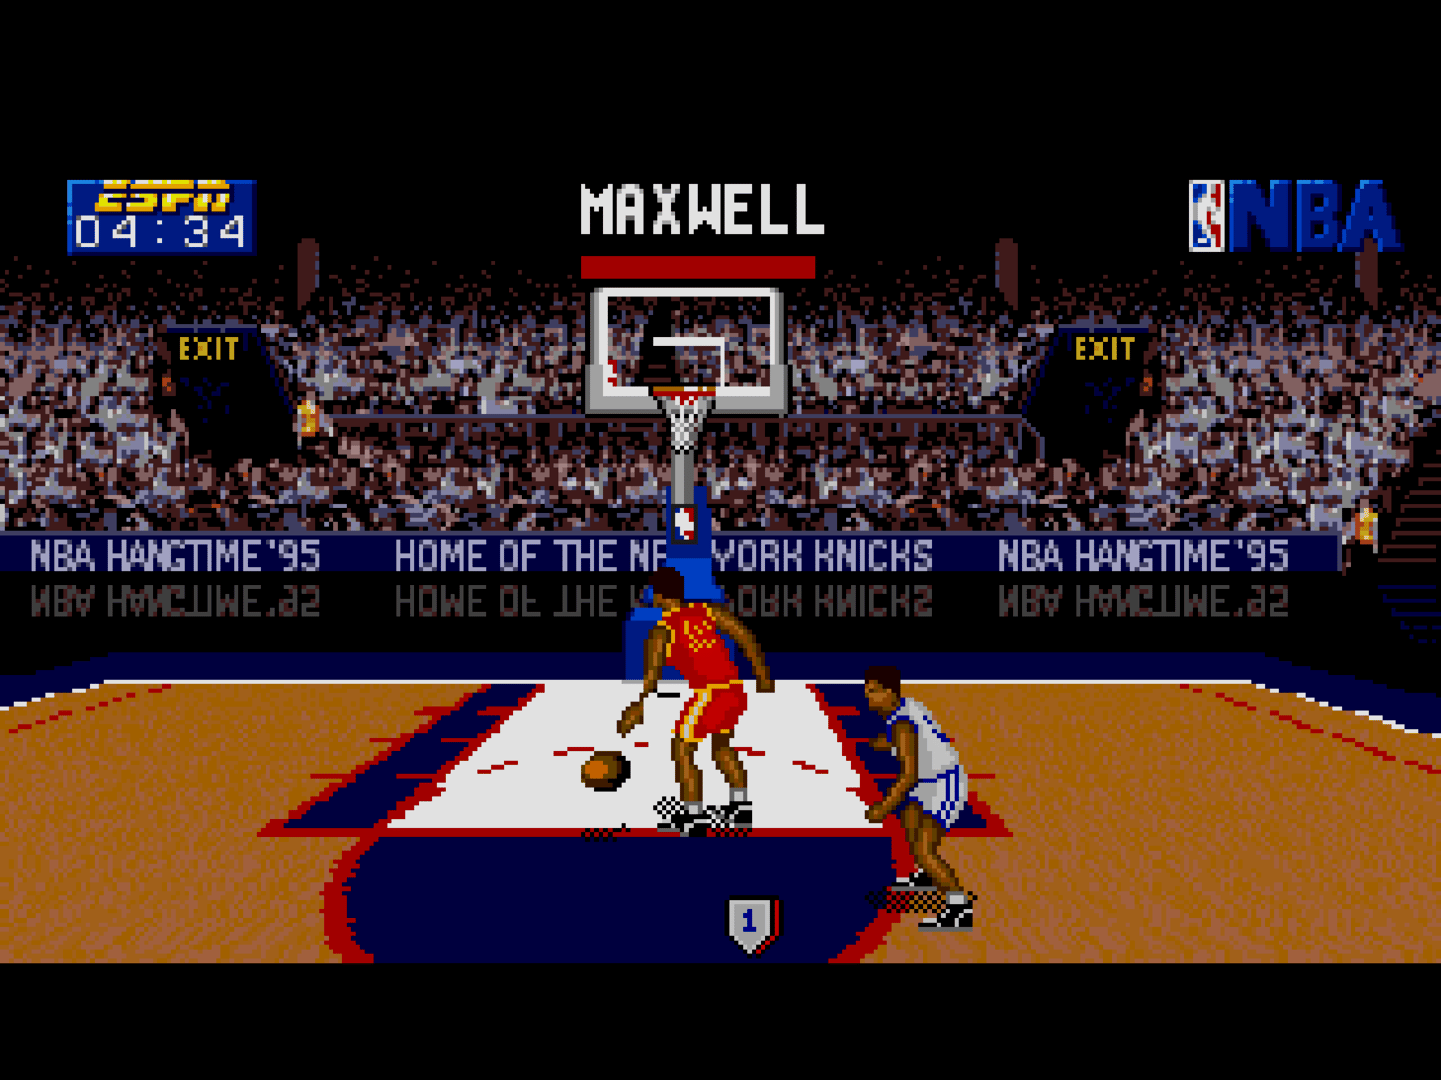 ESPN NBA HangTime '95 screenshot